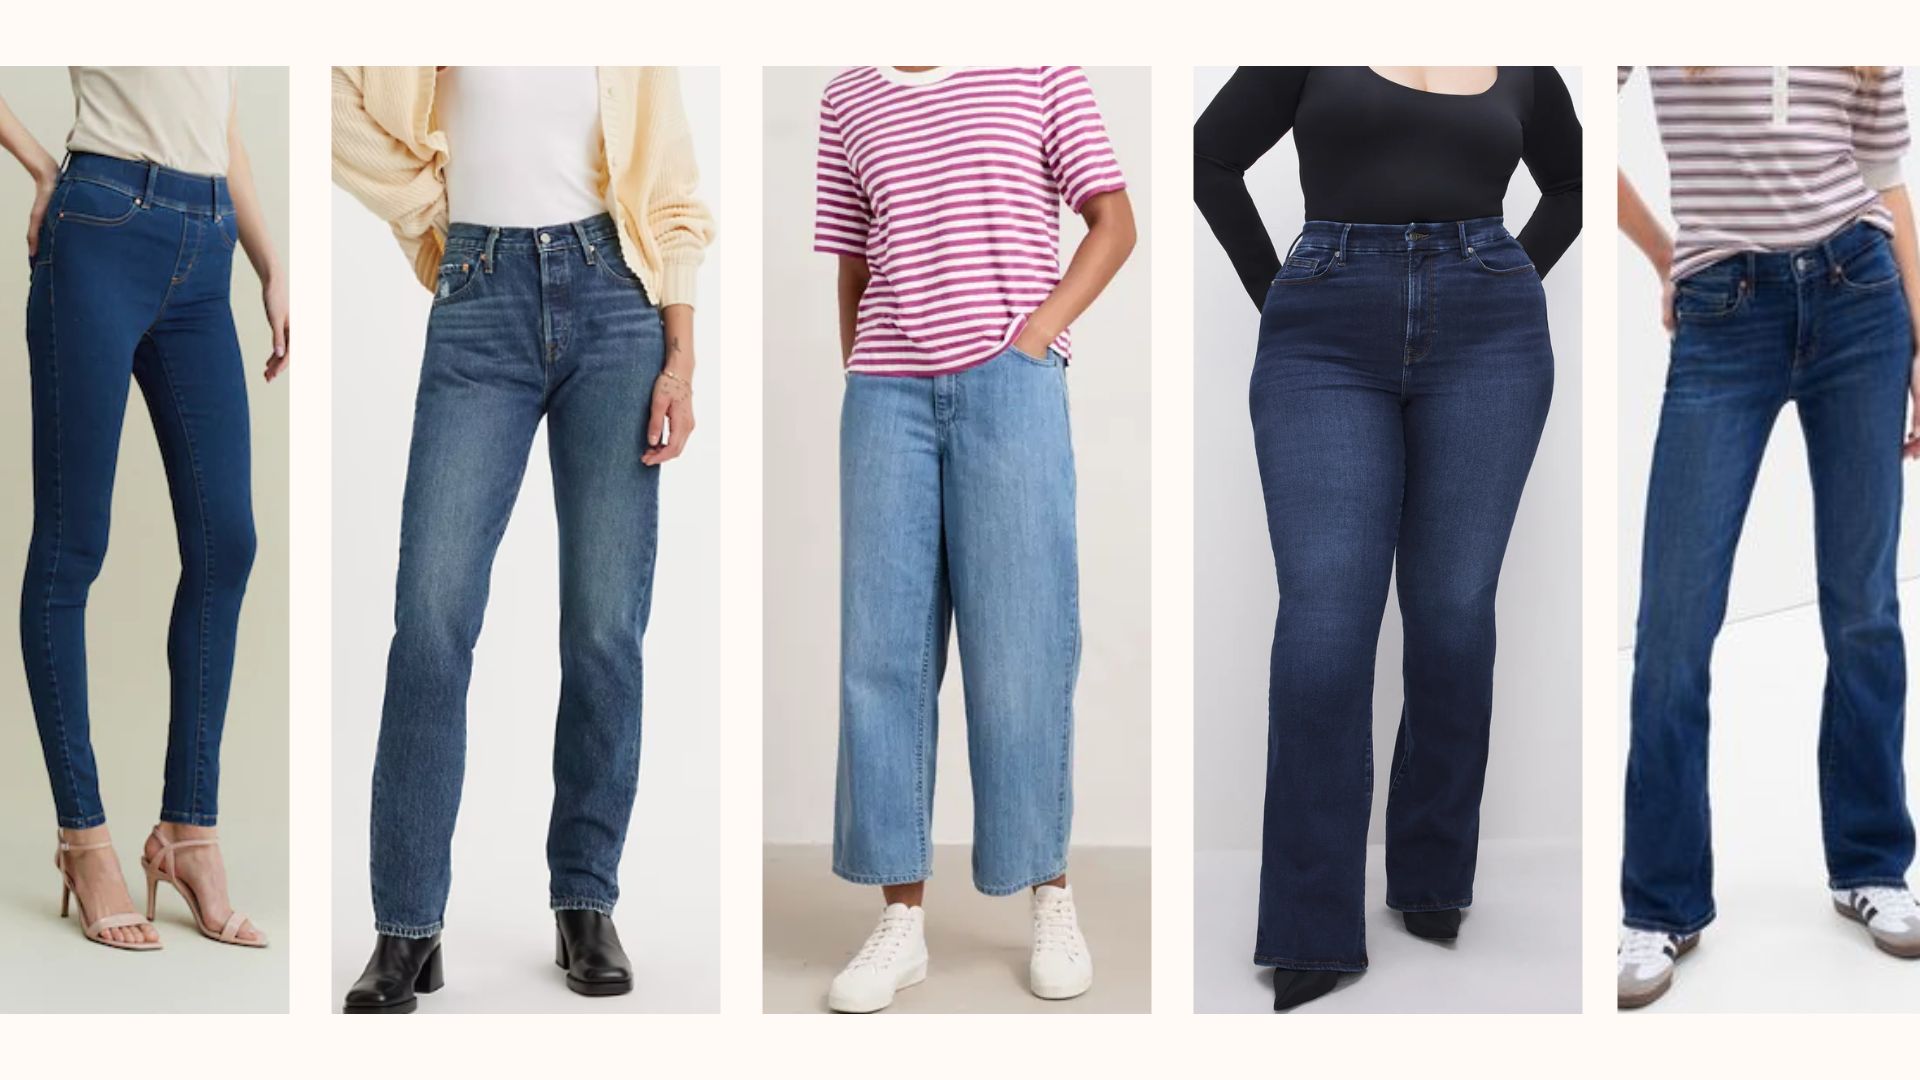 Good American Always Fits Jeans: Feel Like Leggings & Responsibly